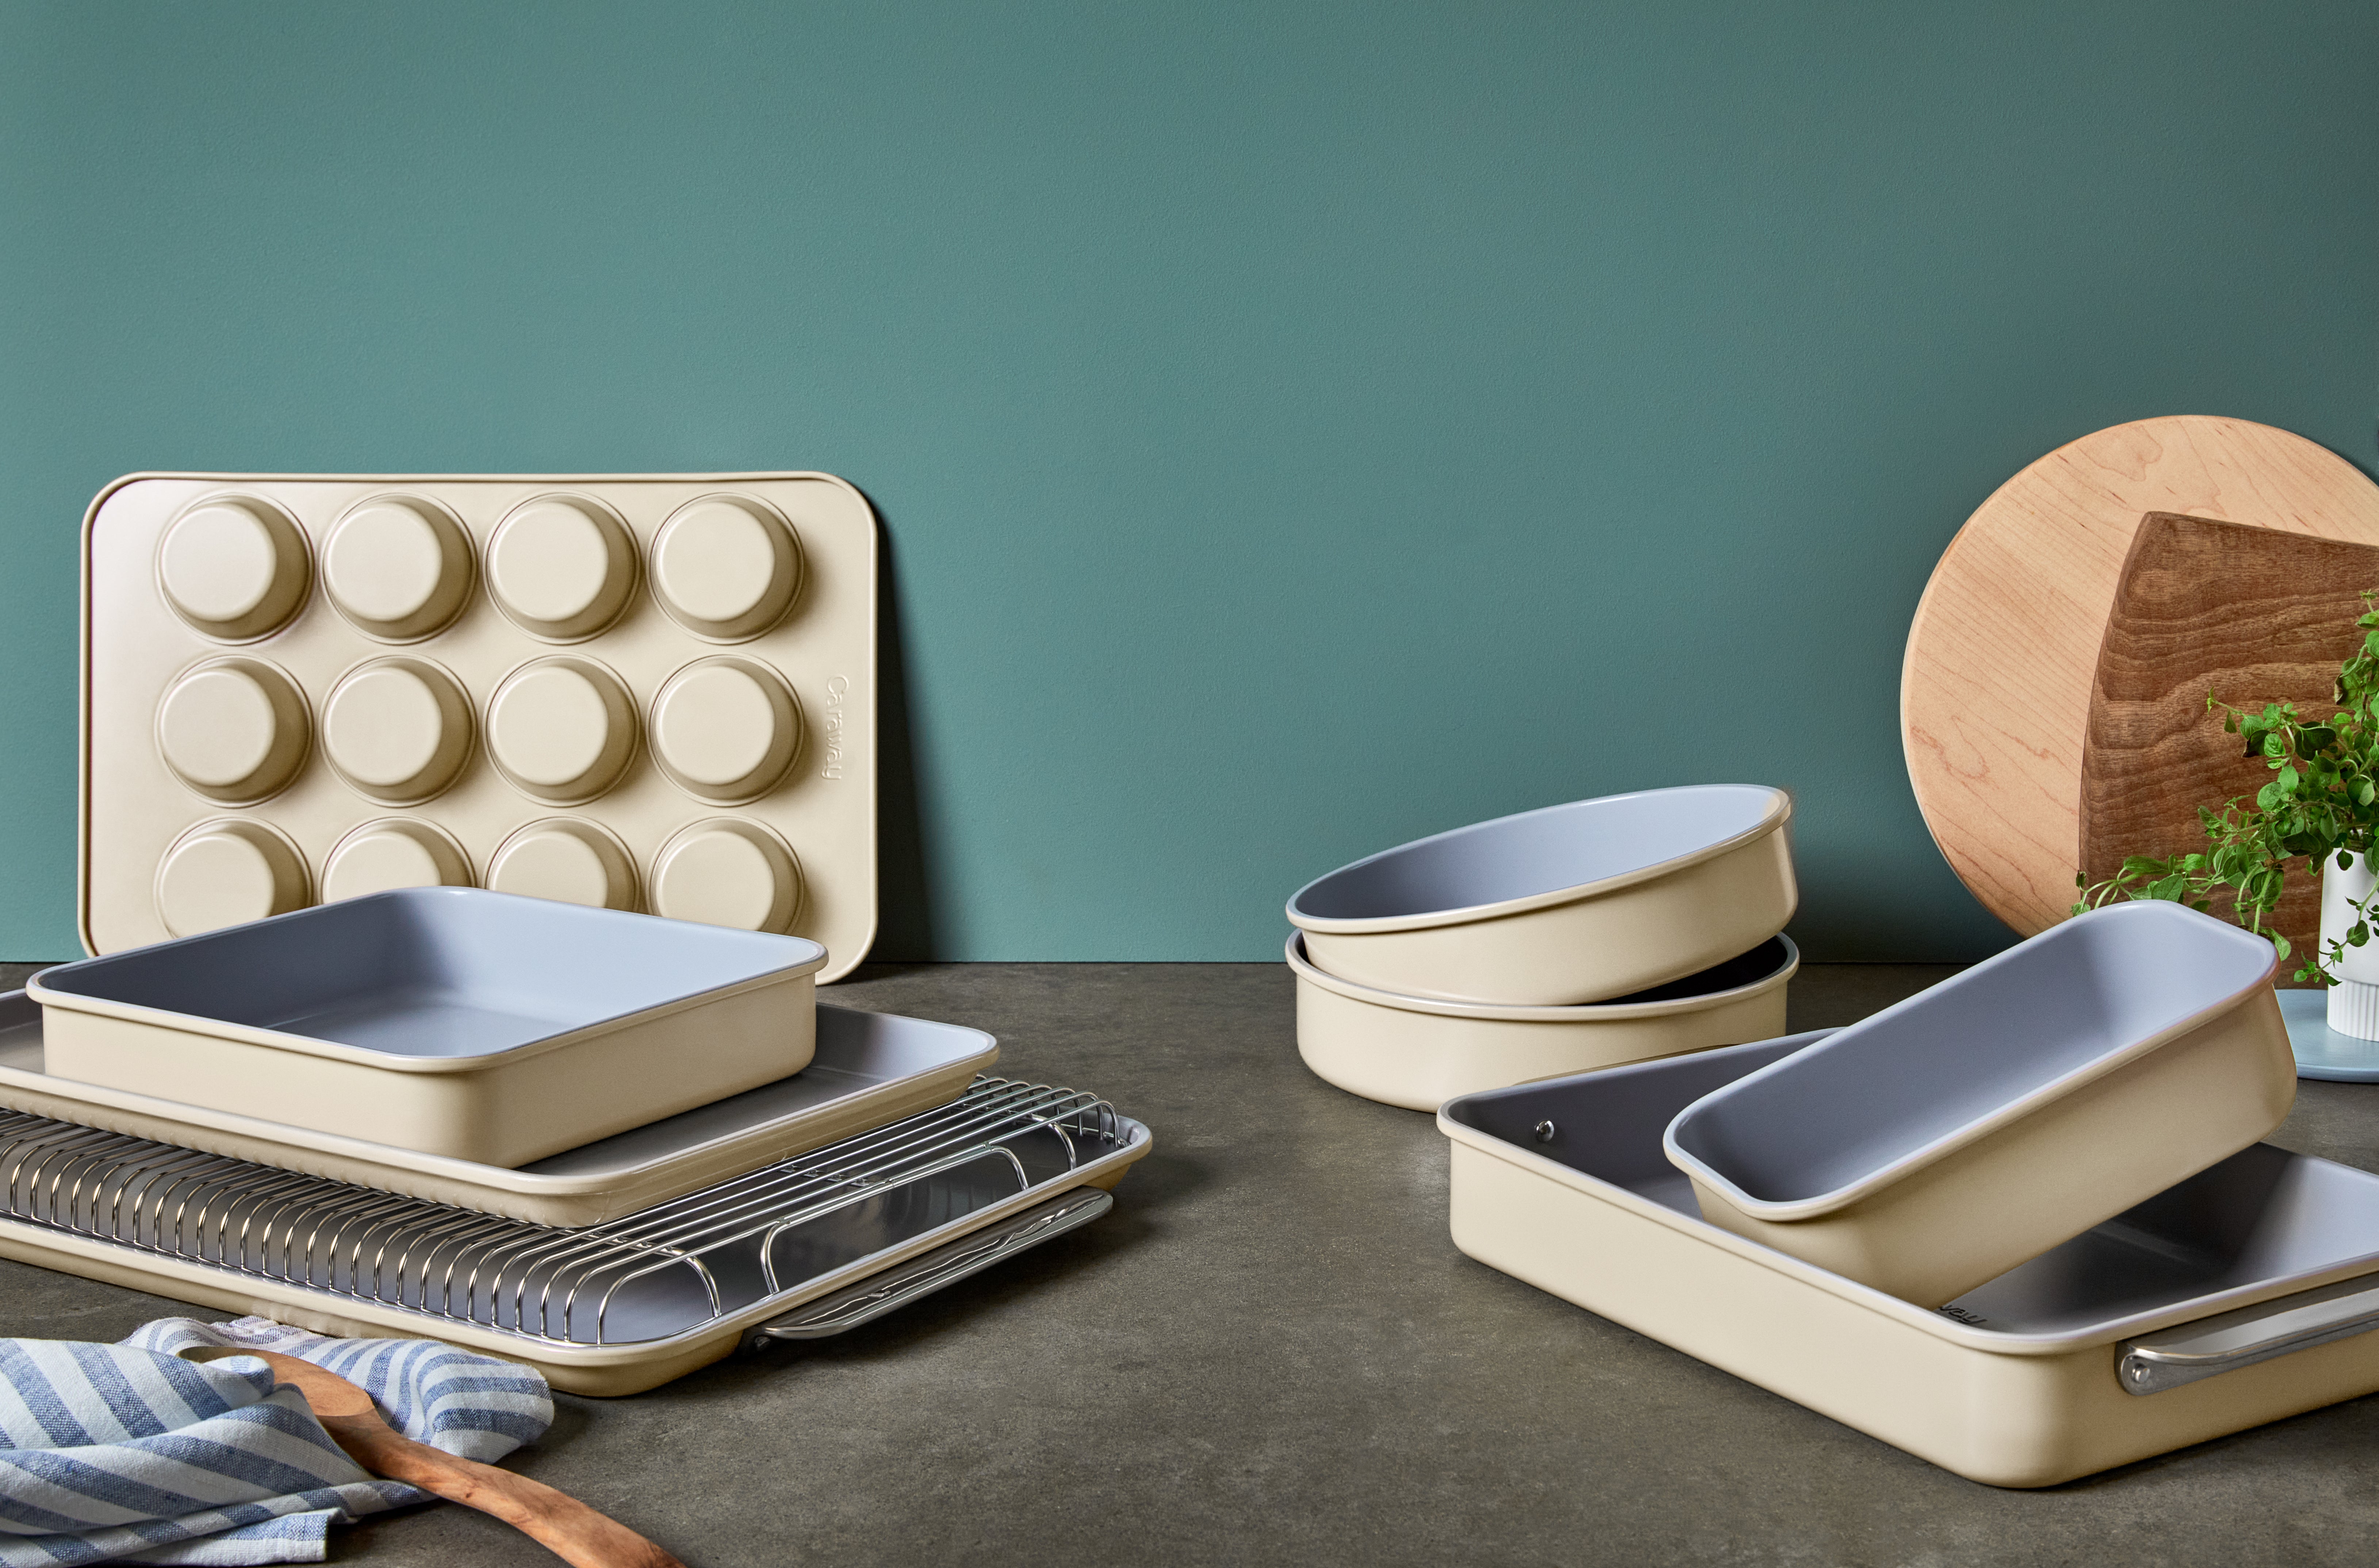 Caraway Non-stick Ceramic Complete Bakeware Set Slate : Target